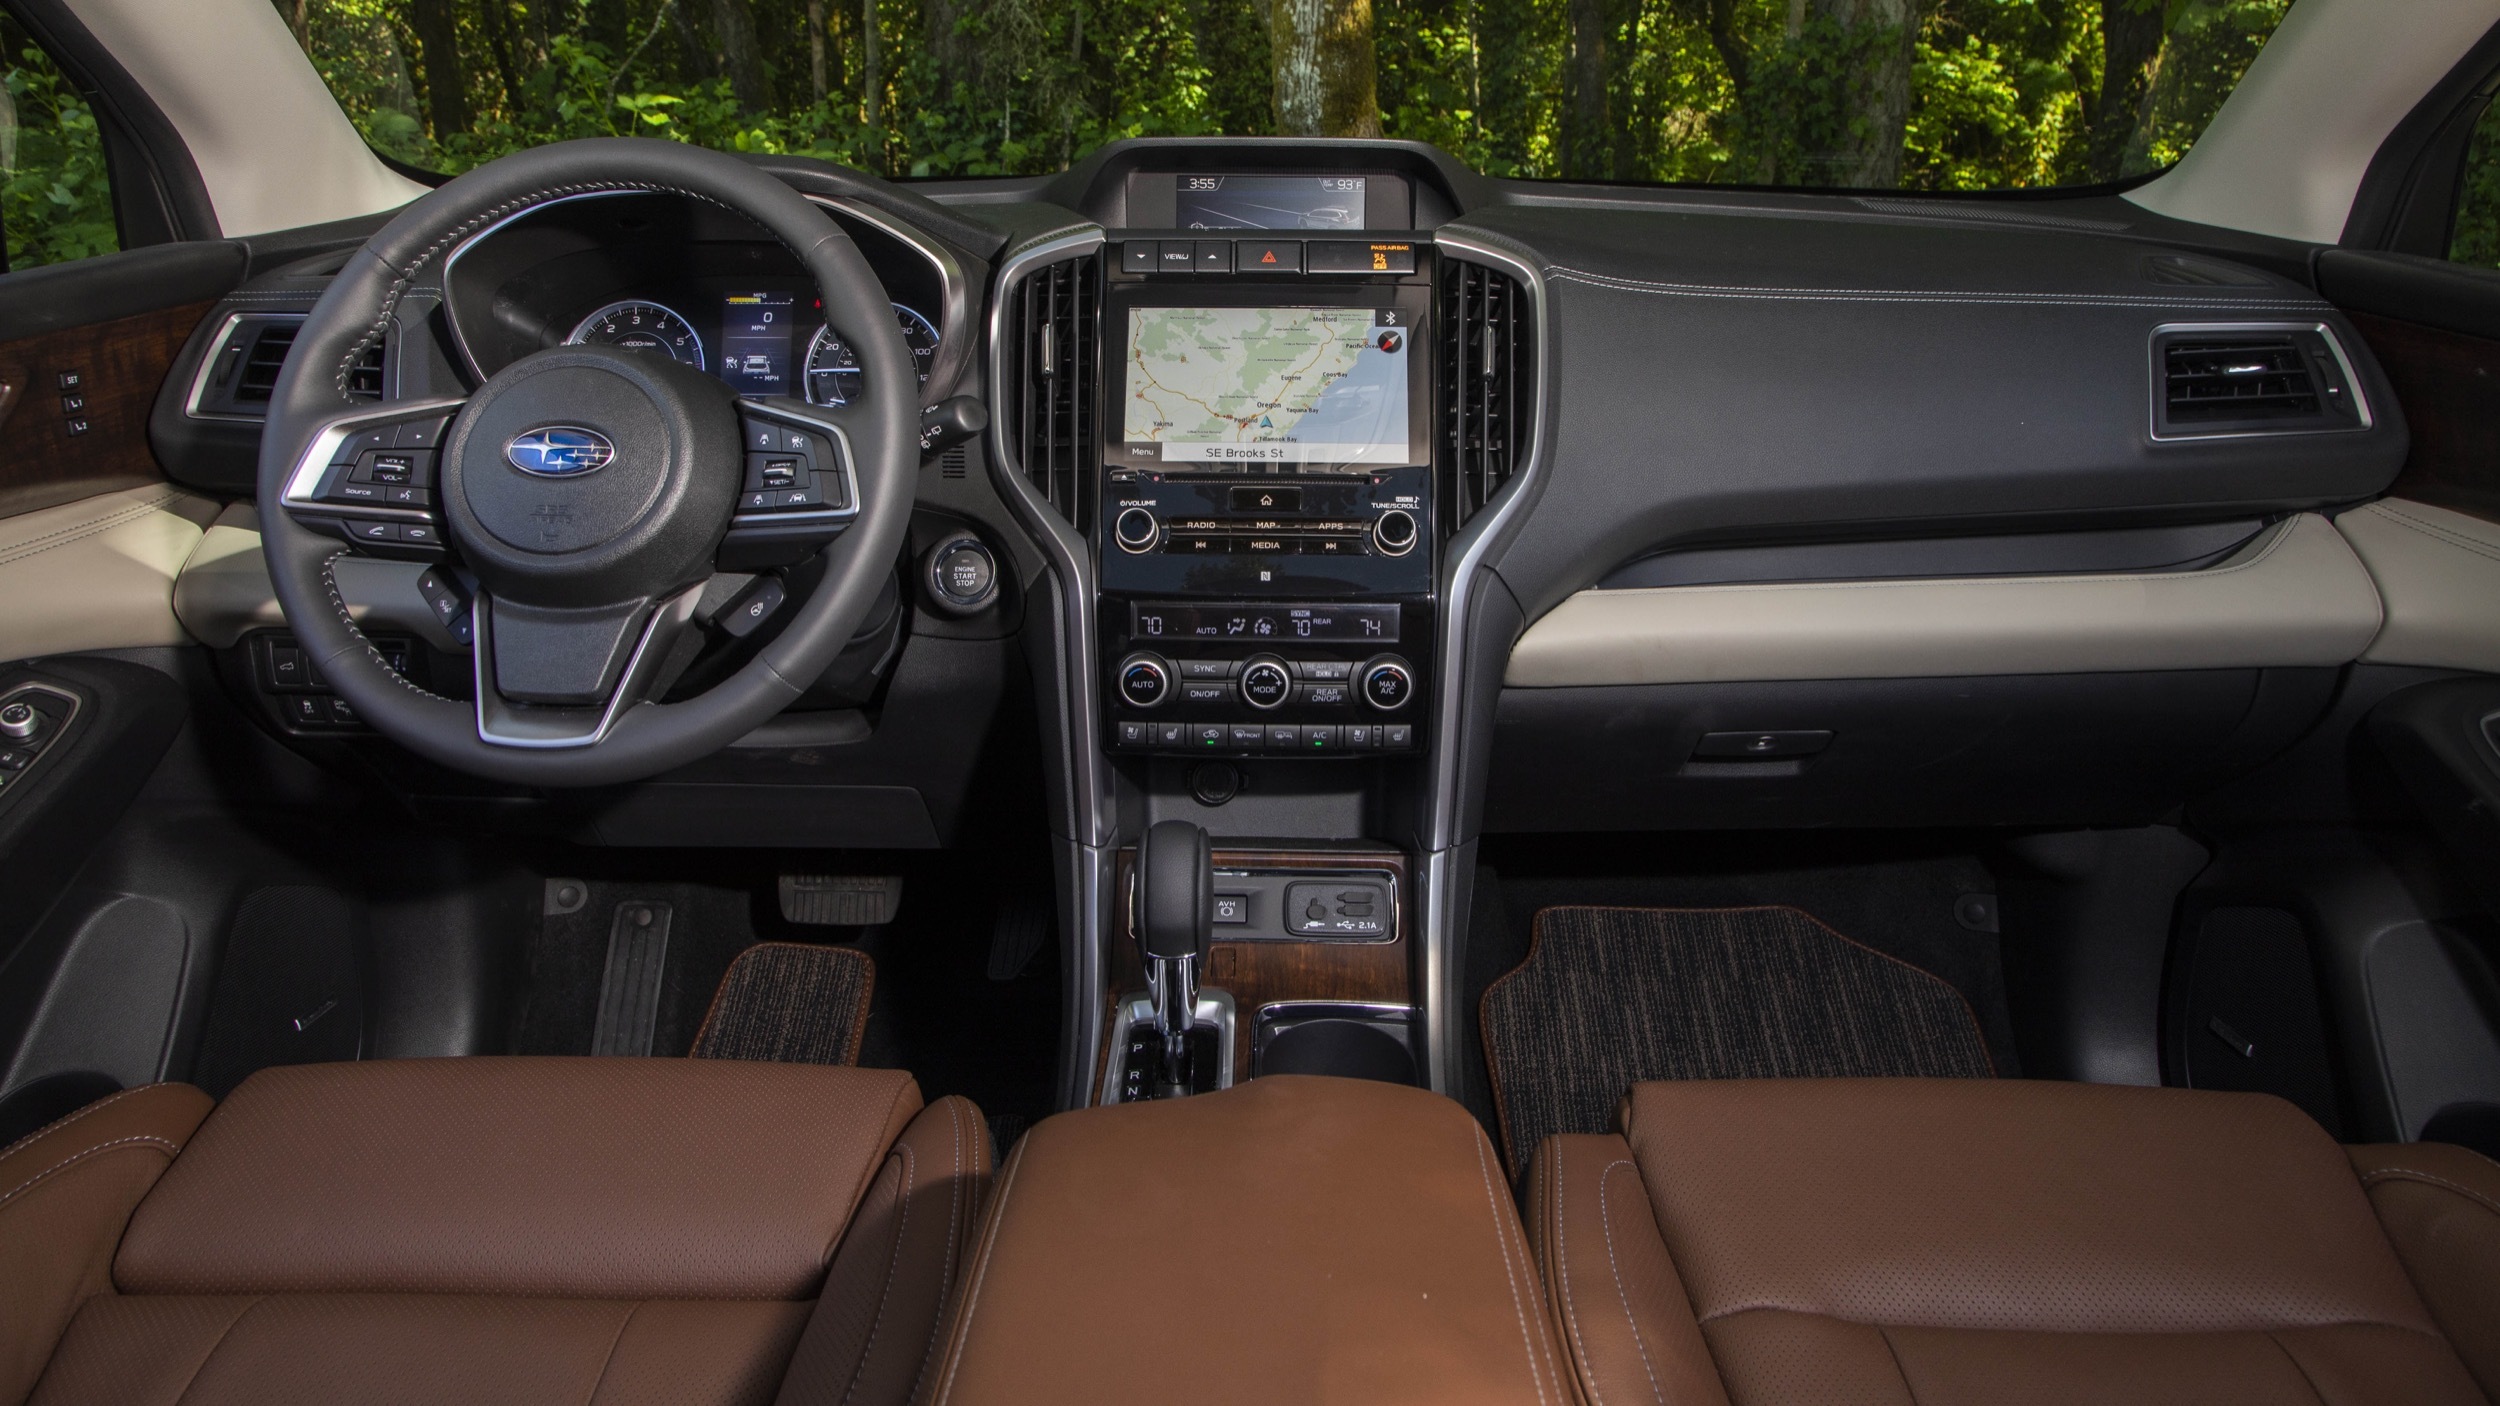 2020 Subaru Ascent Reviews | Price, specs, features and photos | Autoblog